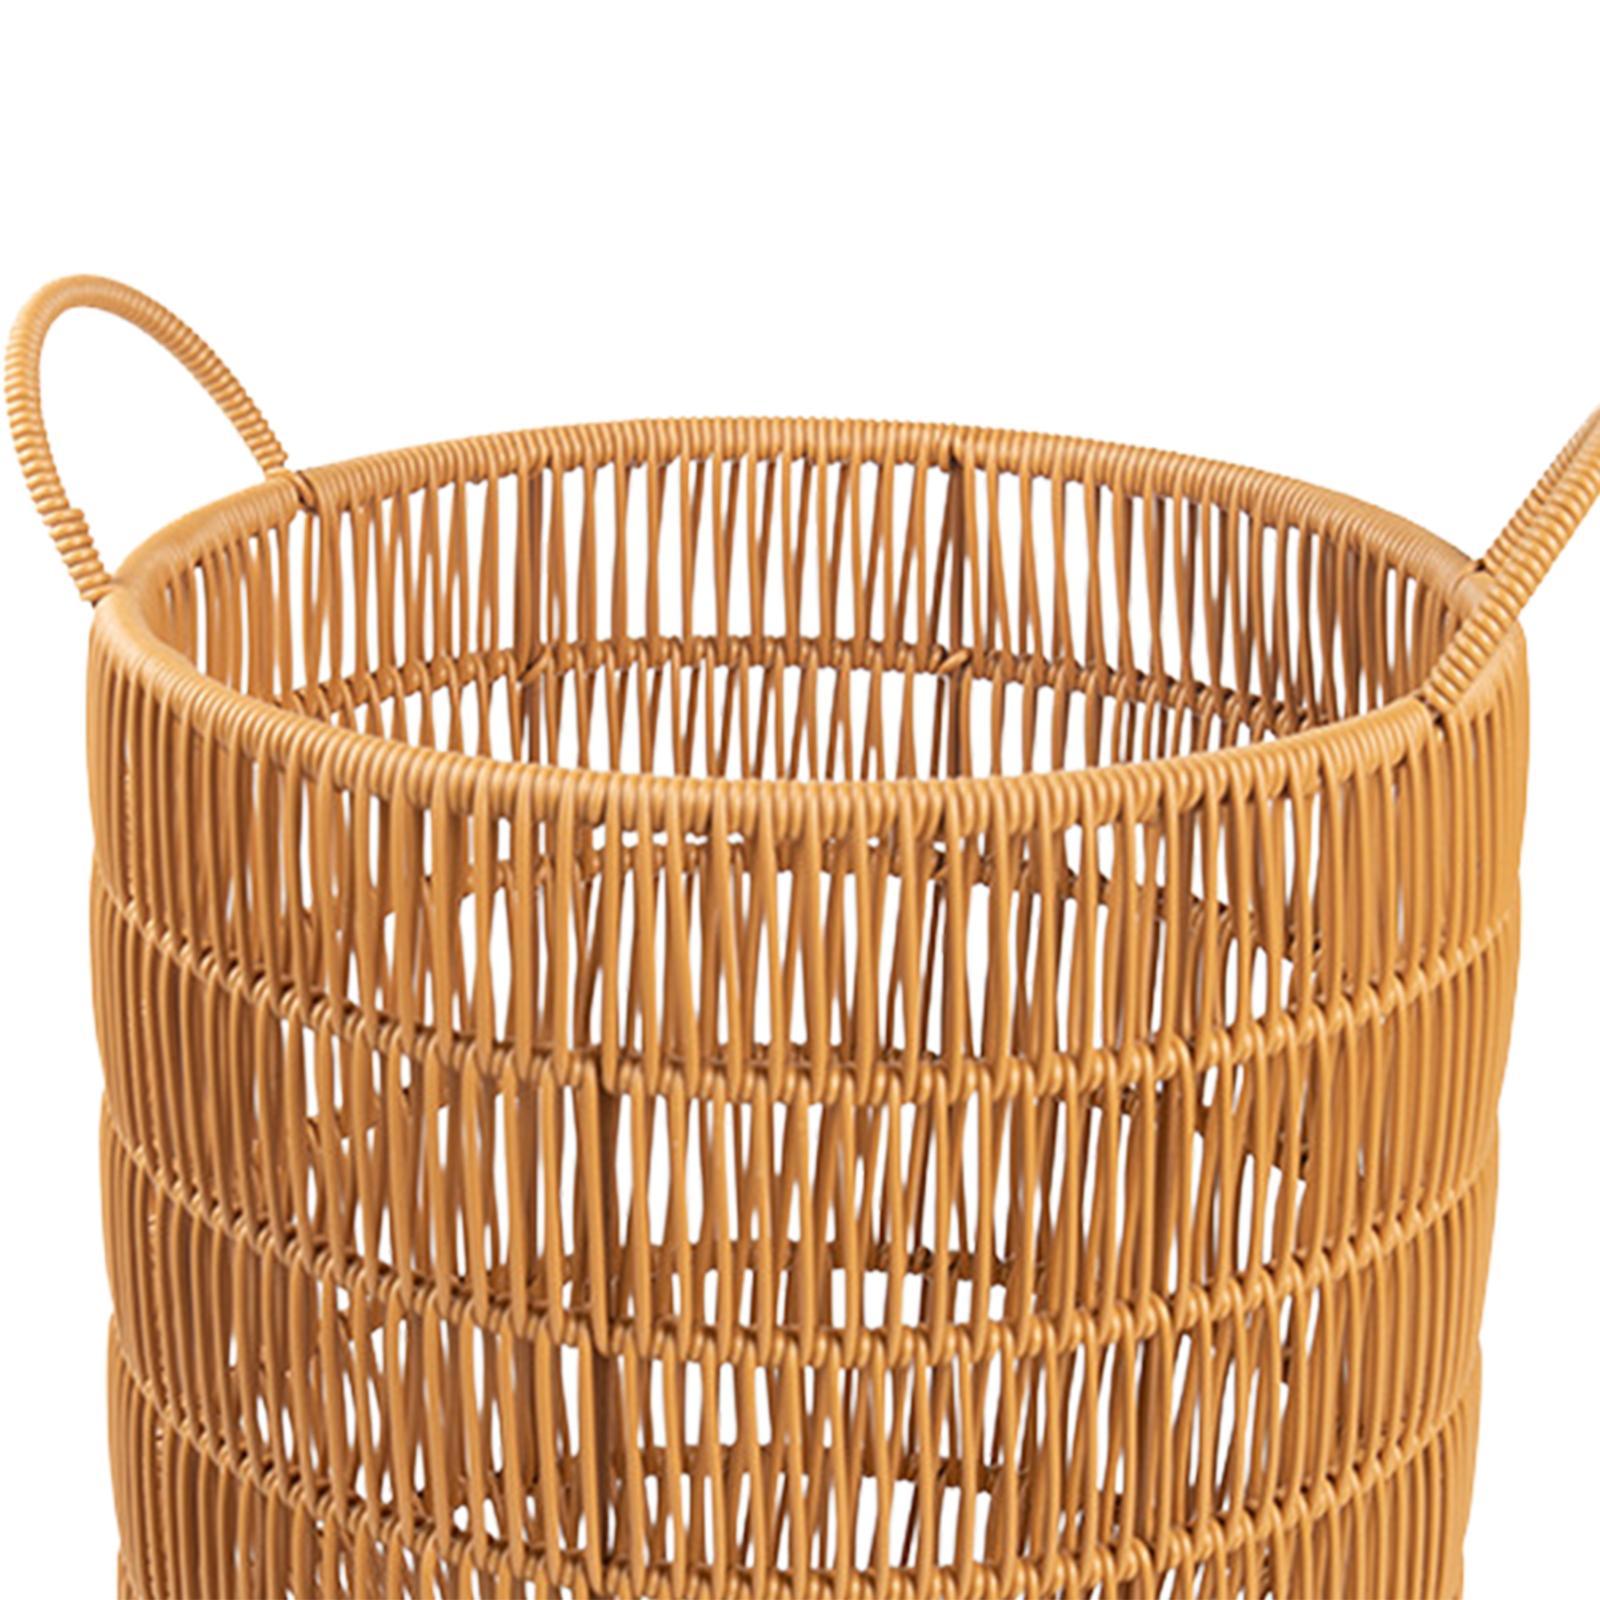 Laundry Woven Basket Bins Blanket Basket Toys Bin with Handles Decorative Basket Wicker Baskets Toys Storage Organizer for Nursery Dorm Home